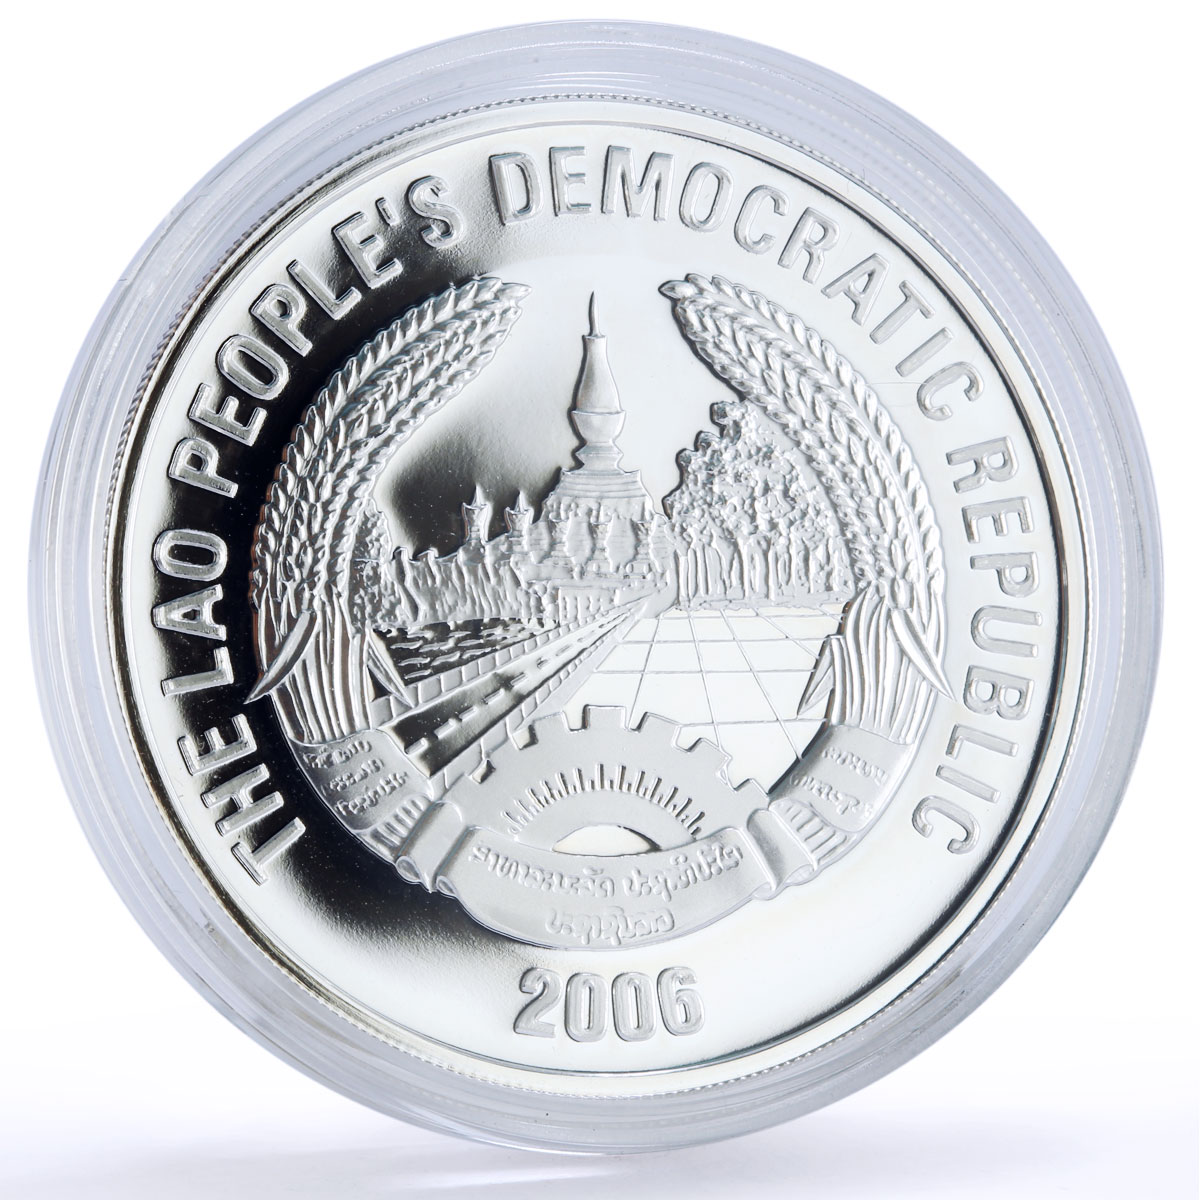 Laos 15000 kip Lunar Calendar Year of the Dog Eminence hologram silver coin 2006